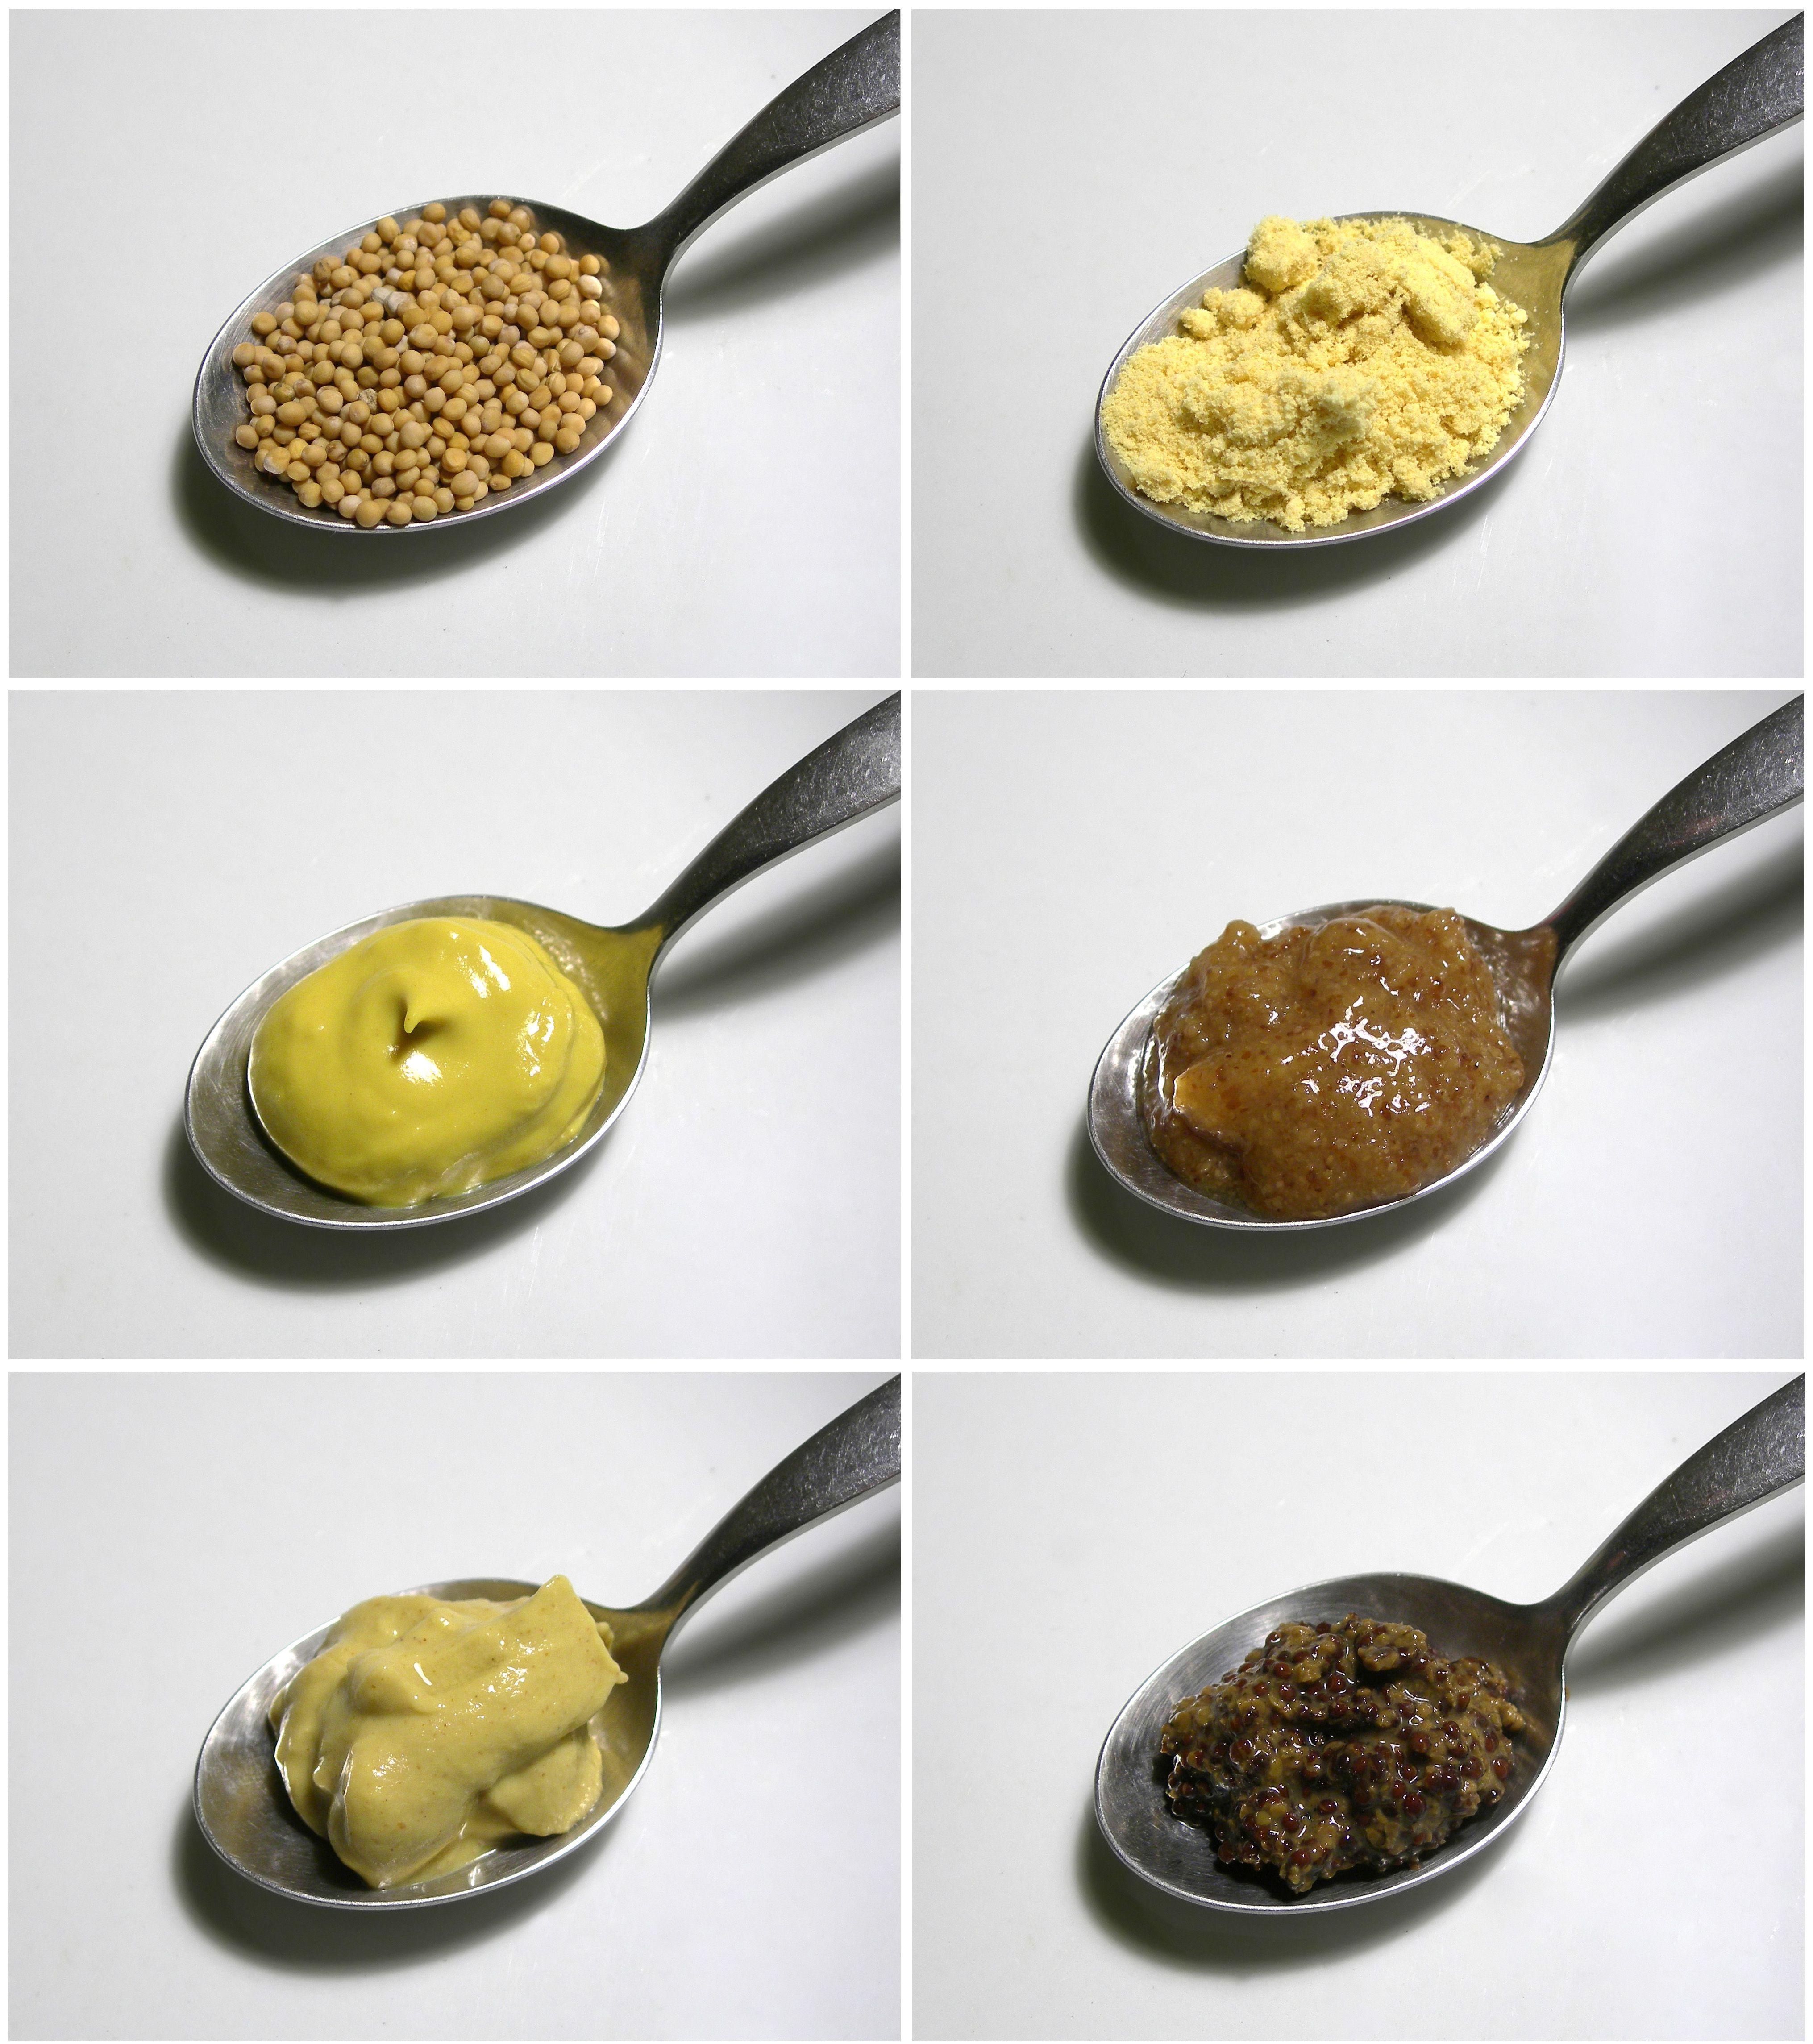 Mustard Varieties - Dijon, English, German